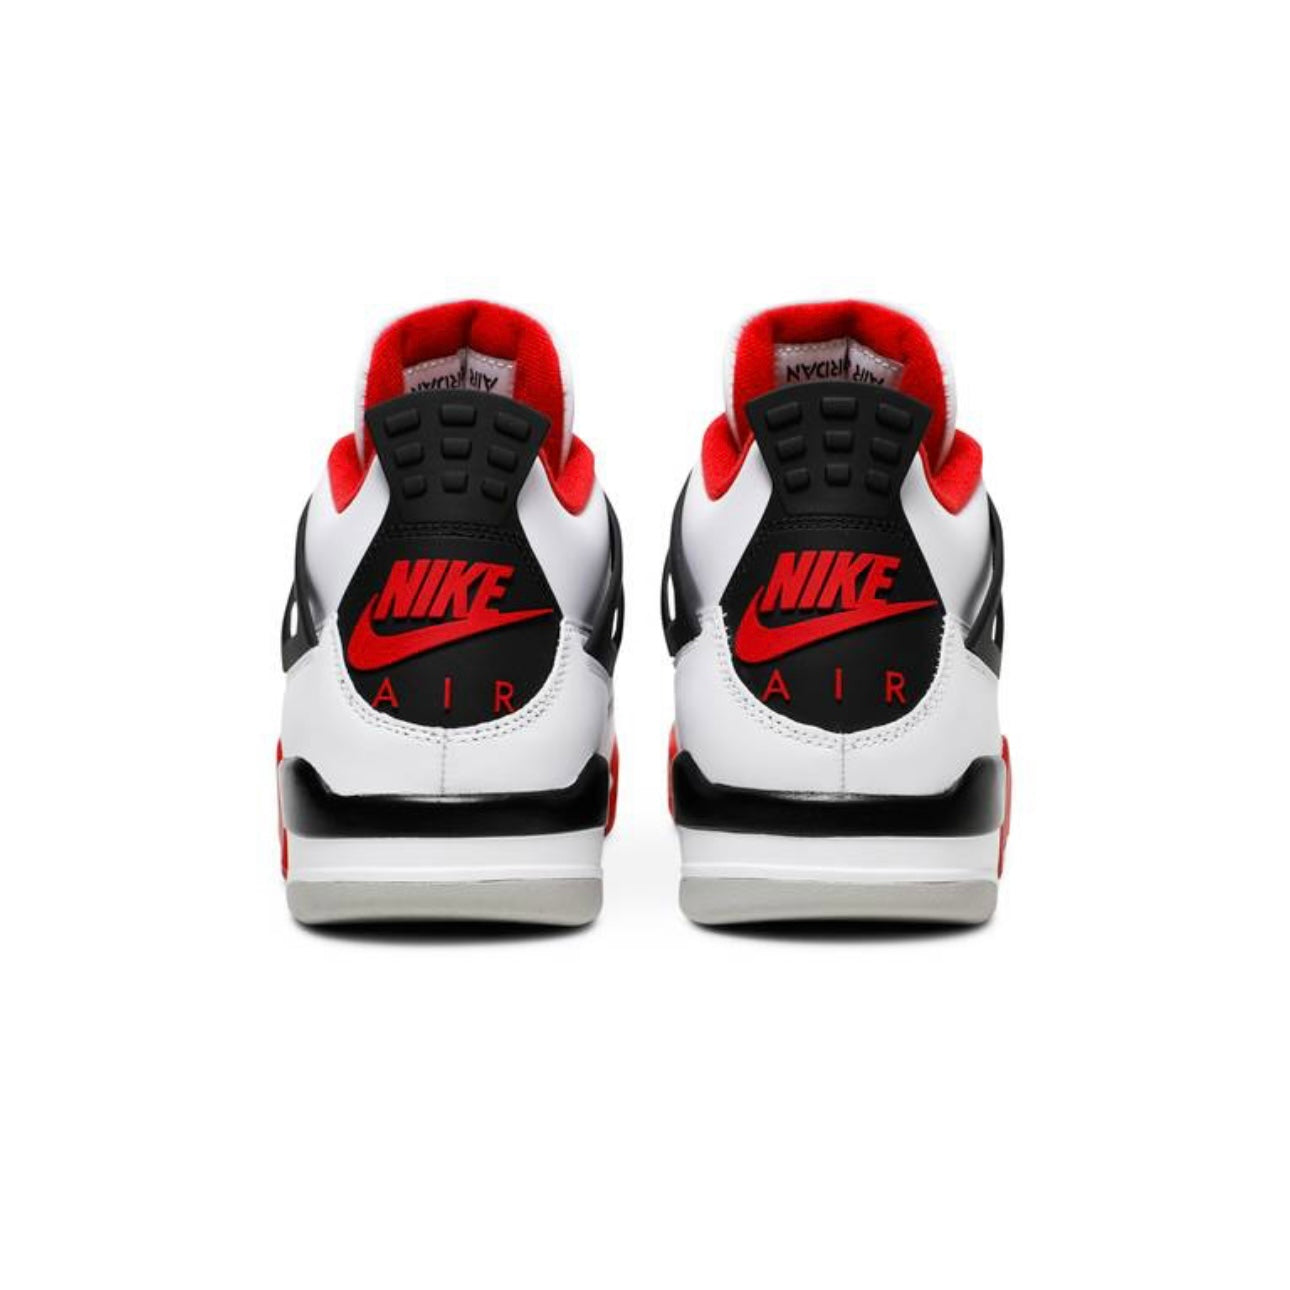 Air Jordan Retro 4 "Fire Red" [2020]